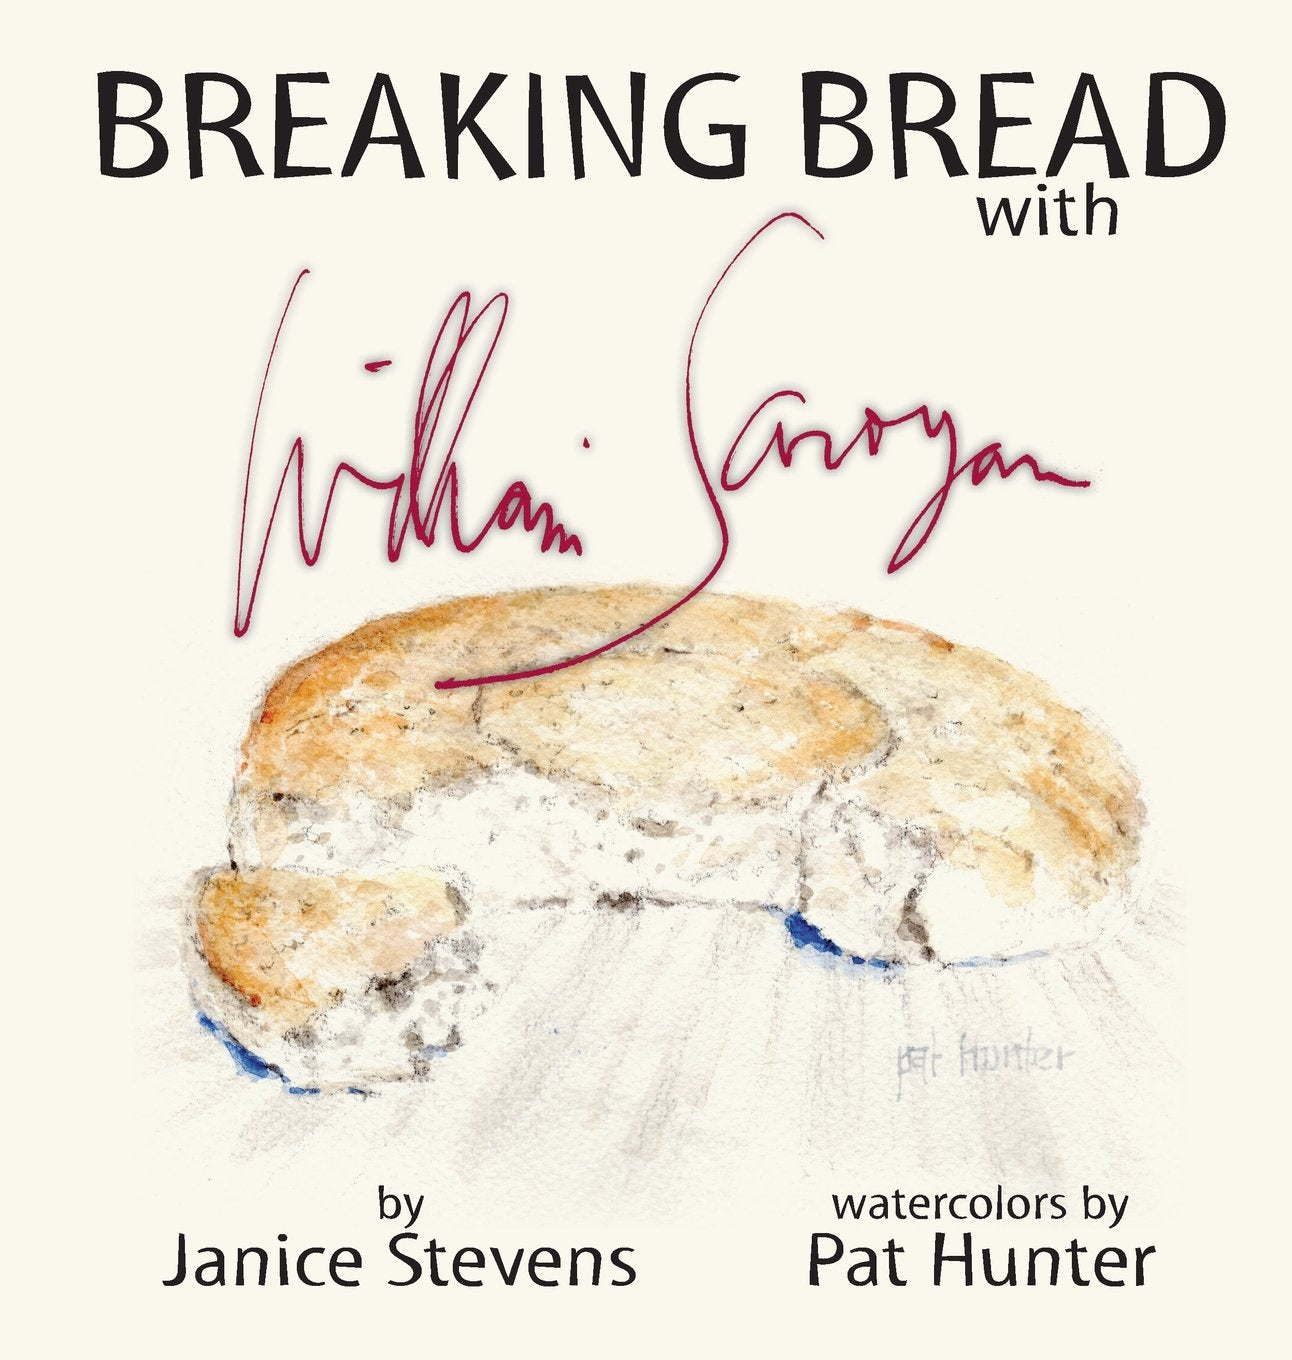 BREAKING BREAD WITH WILLIAM SAROYAN